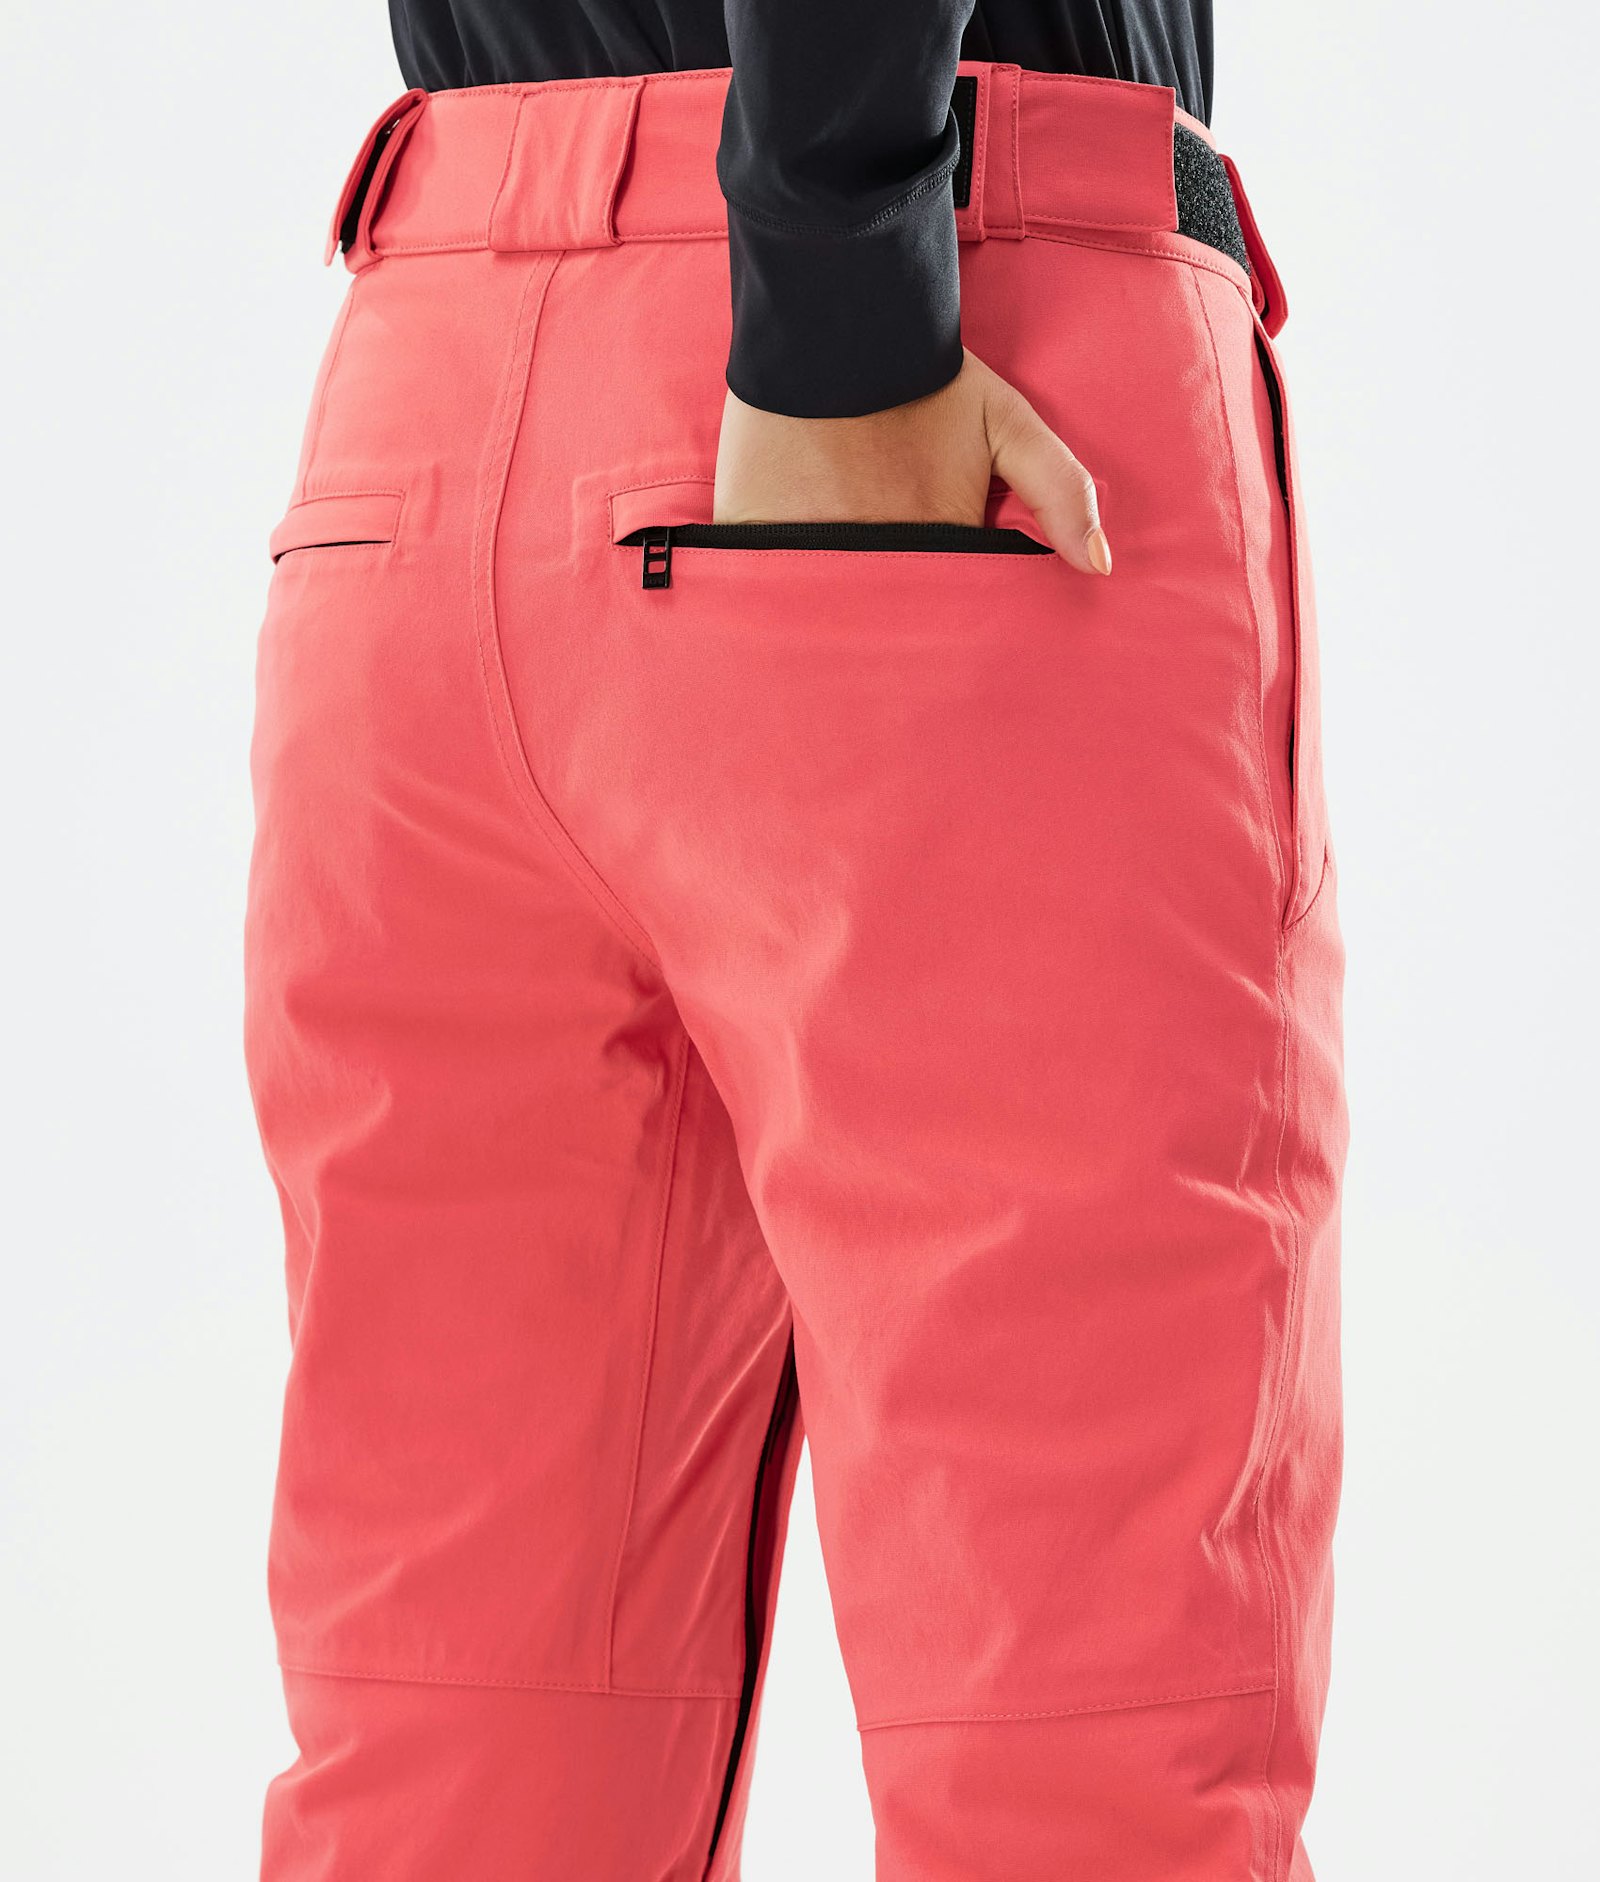 Con W 2021 Pantalon de Snowboard Femme Coral